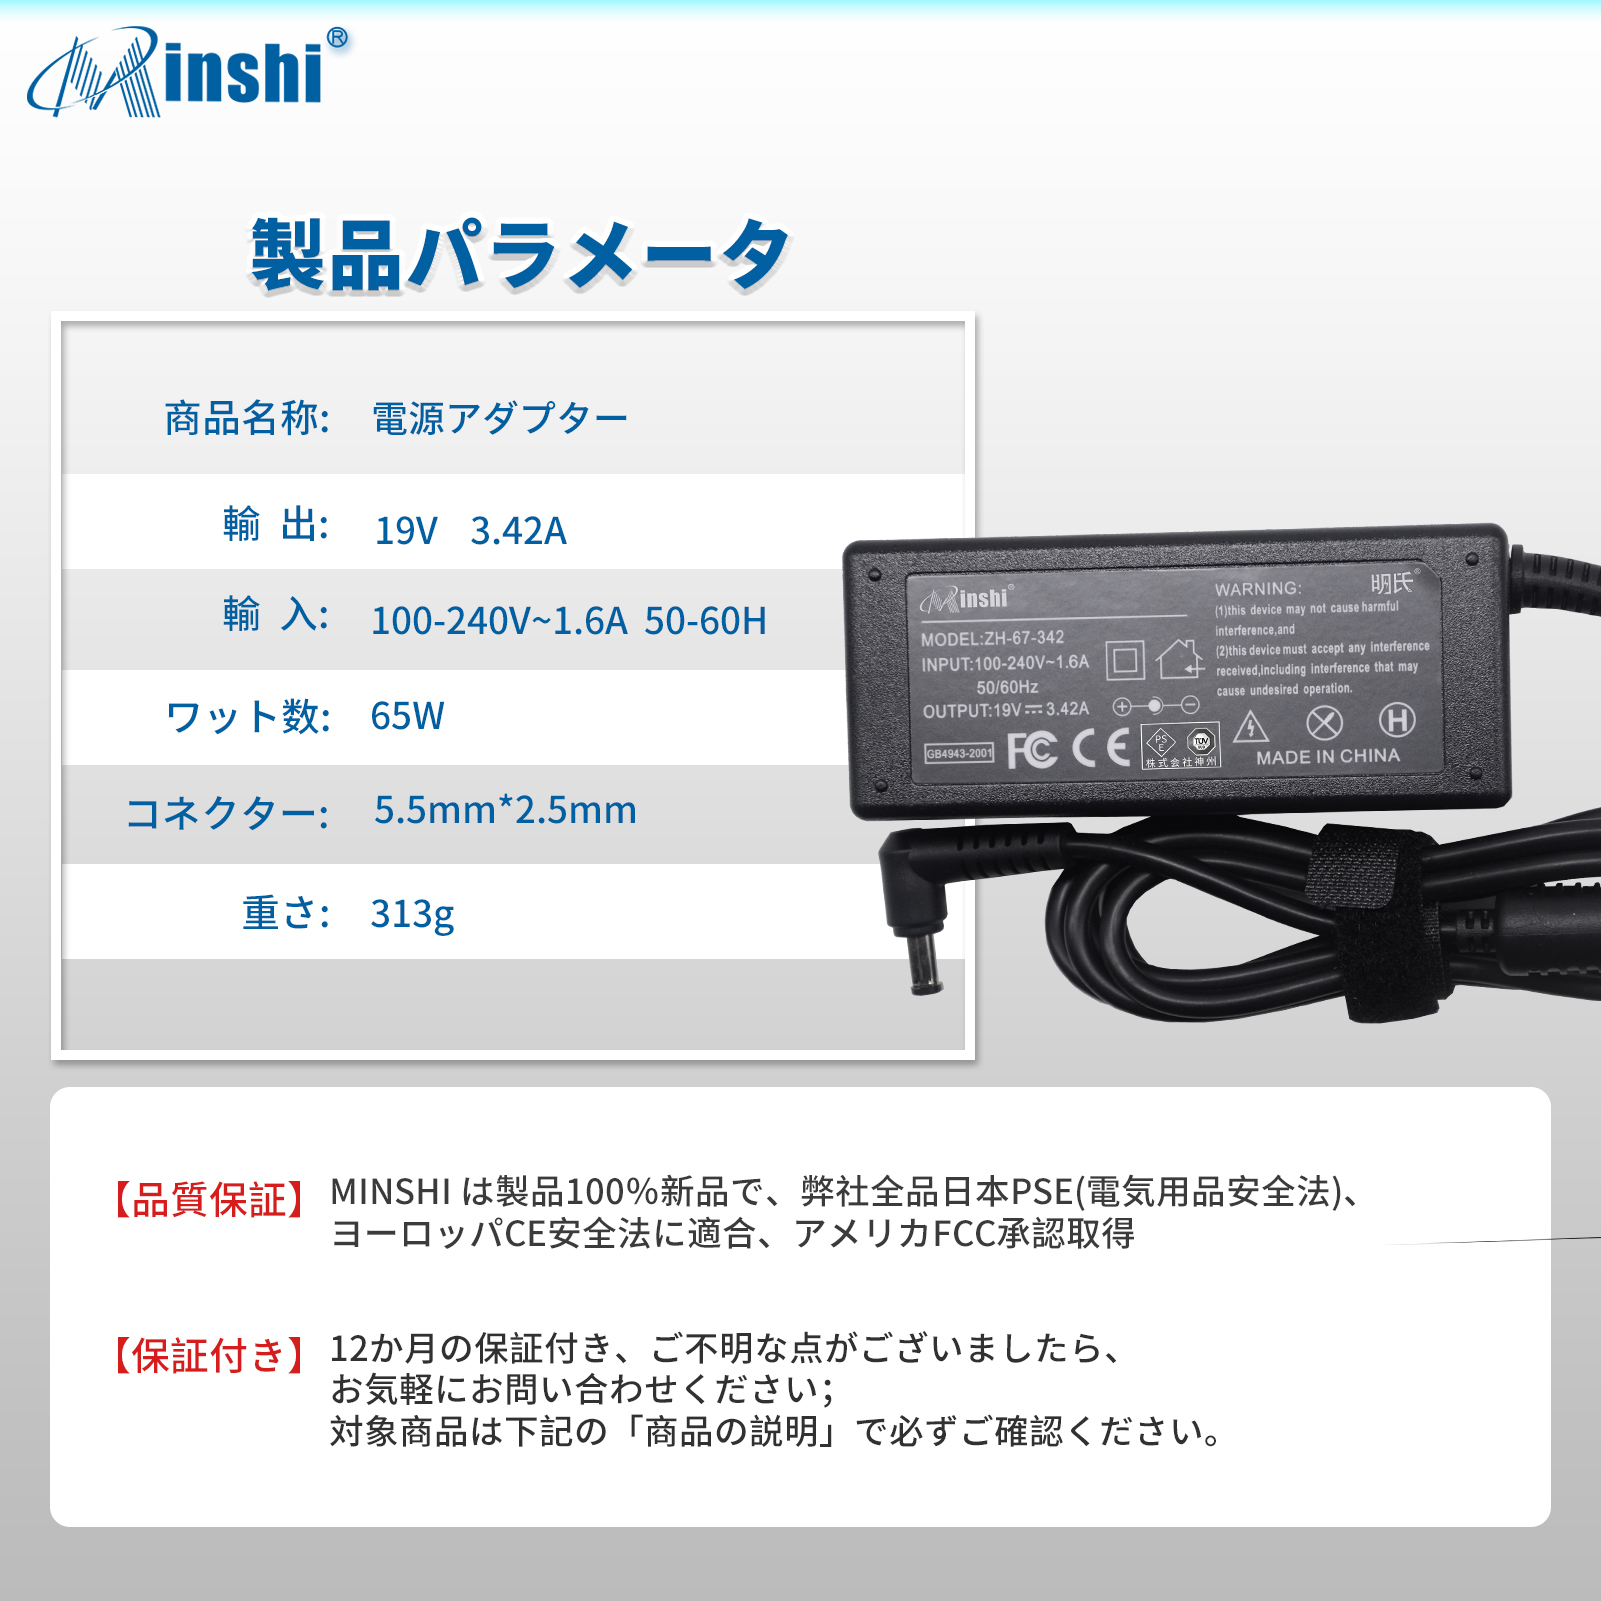  minshi 東芝 Dynabook TX 65 対応 PABAS173 互換バッテリー 5200mAh PSE認定済 高品質交換用バッテリー